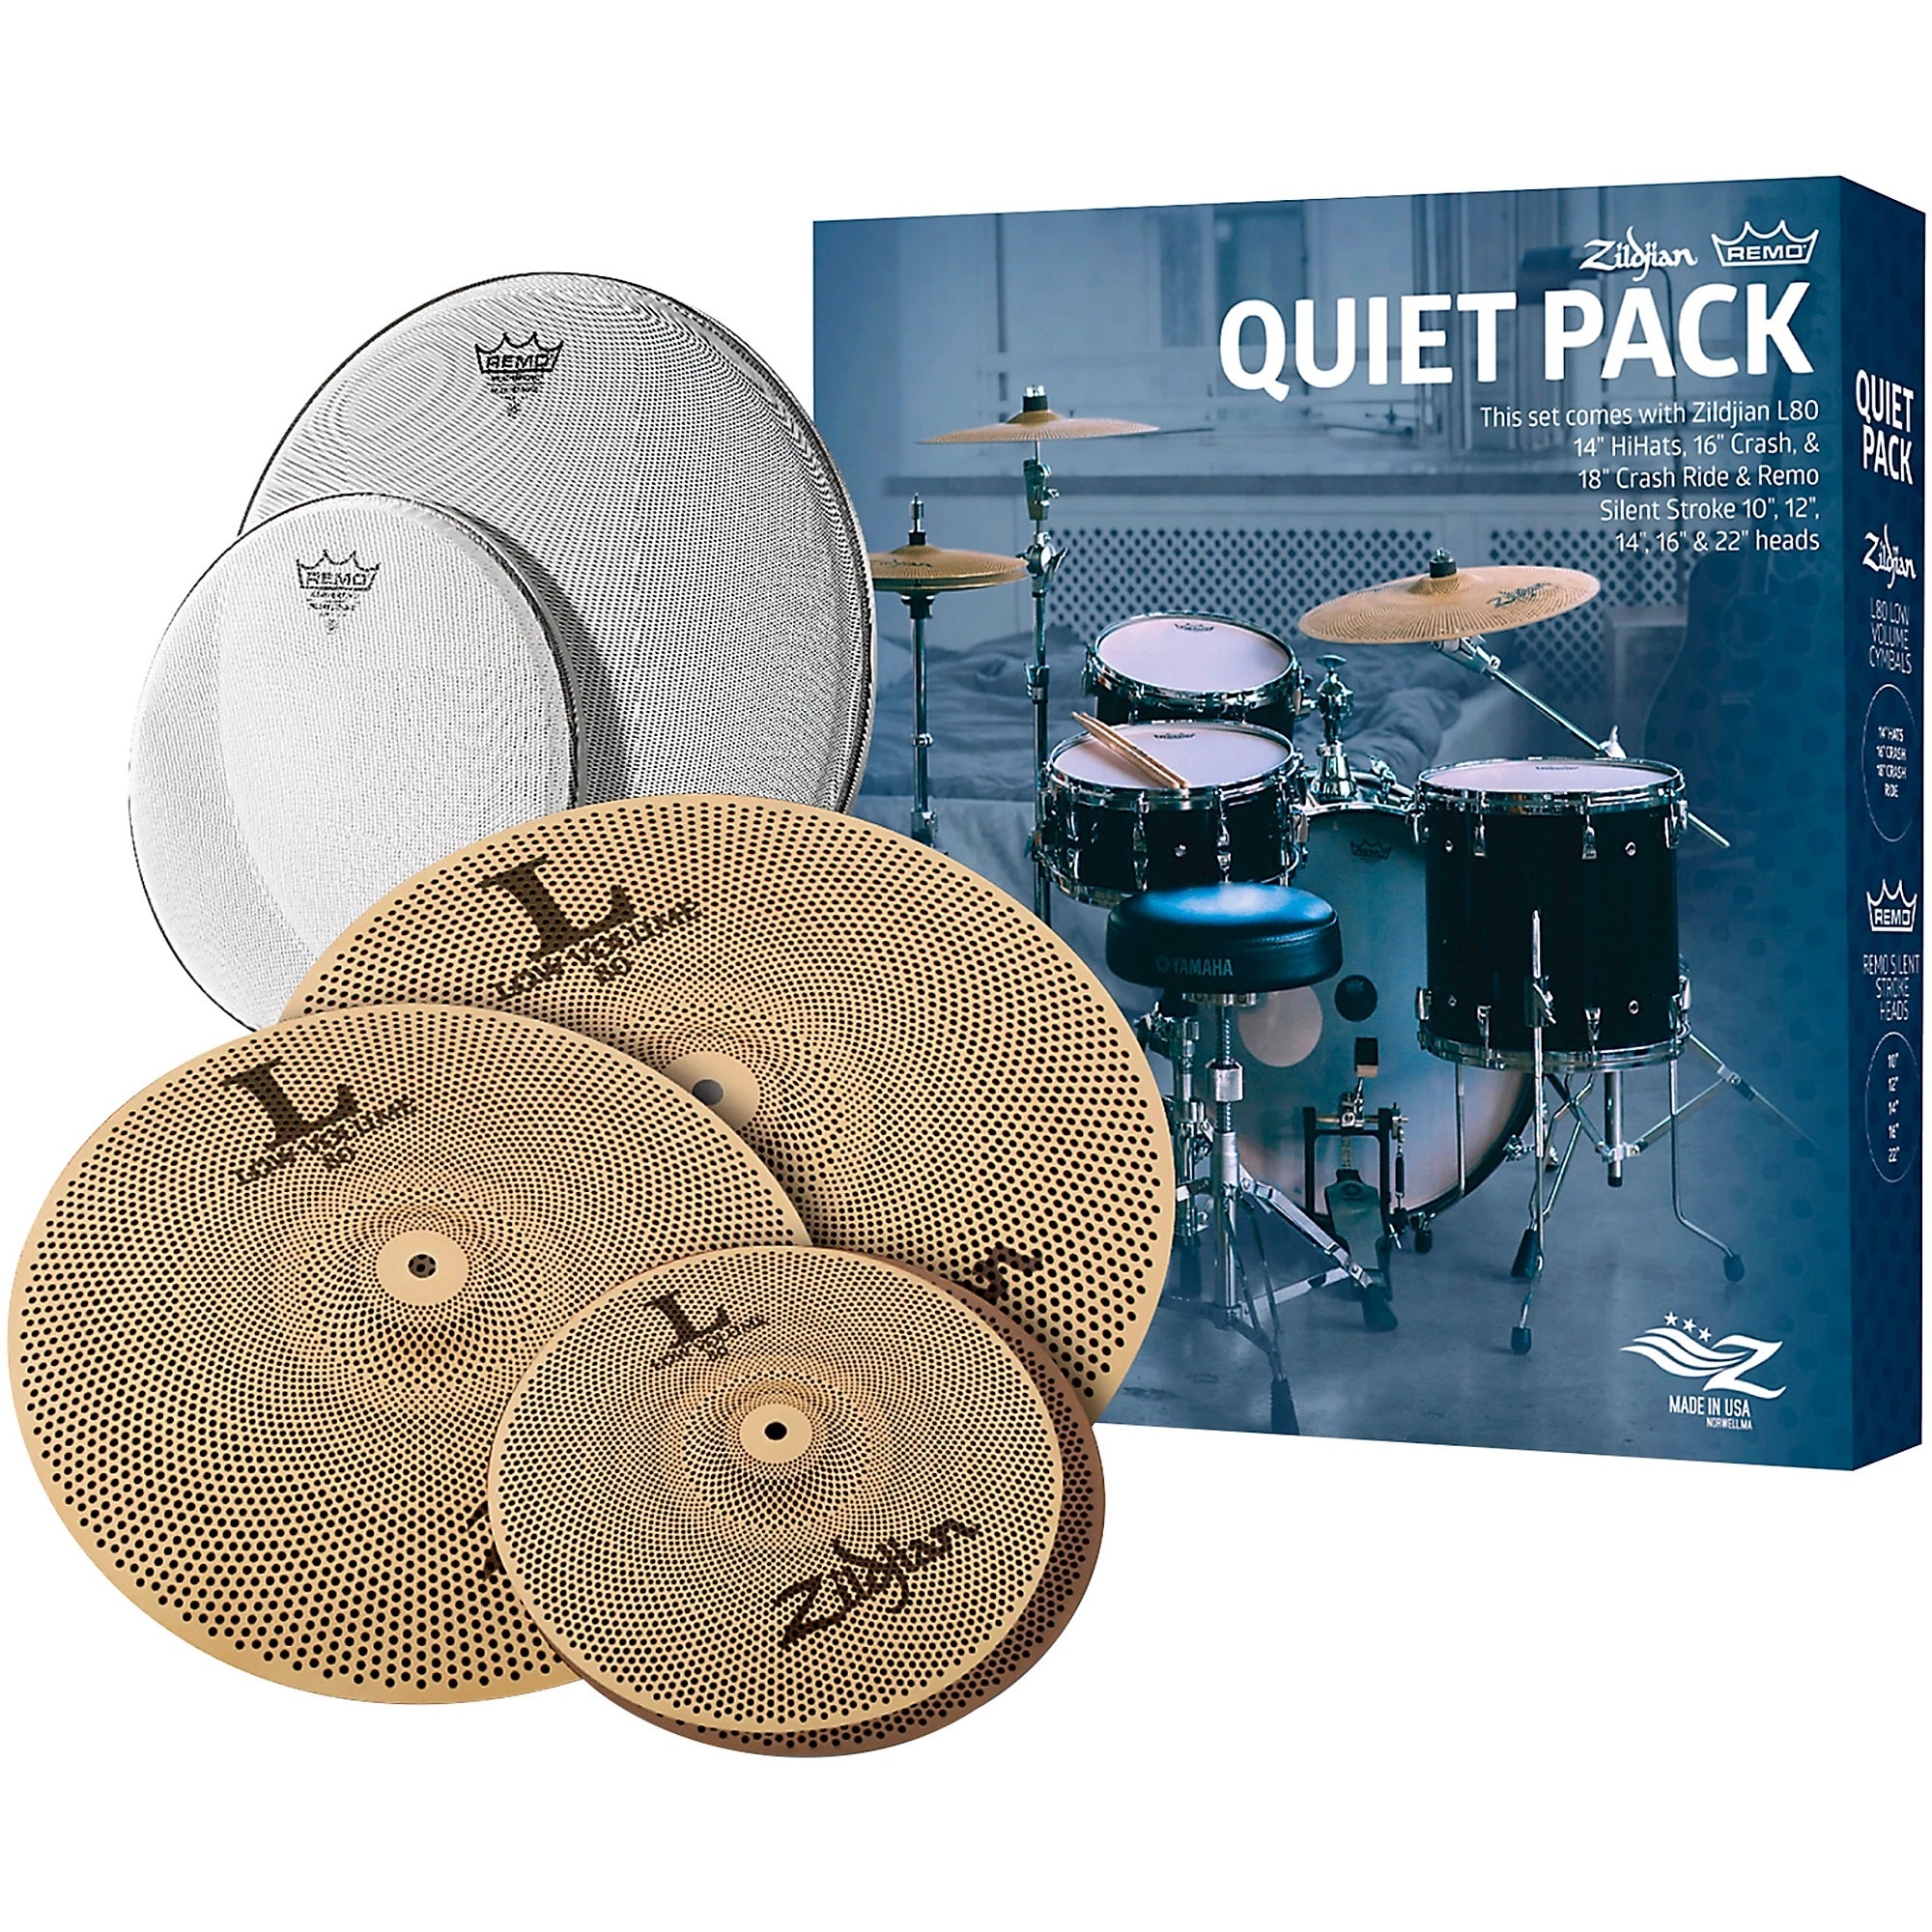 Zildjian Low Volume Cymbal Pack with Remo Silentstroke Heads